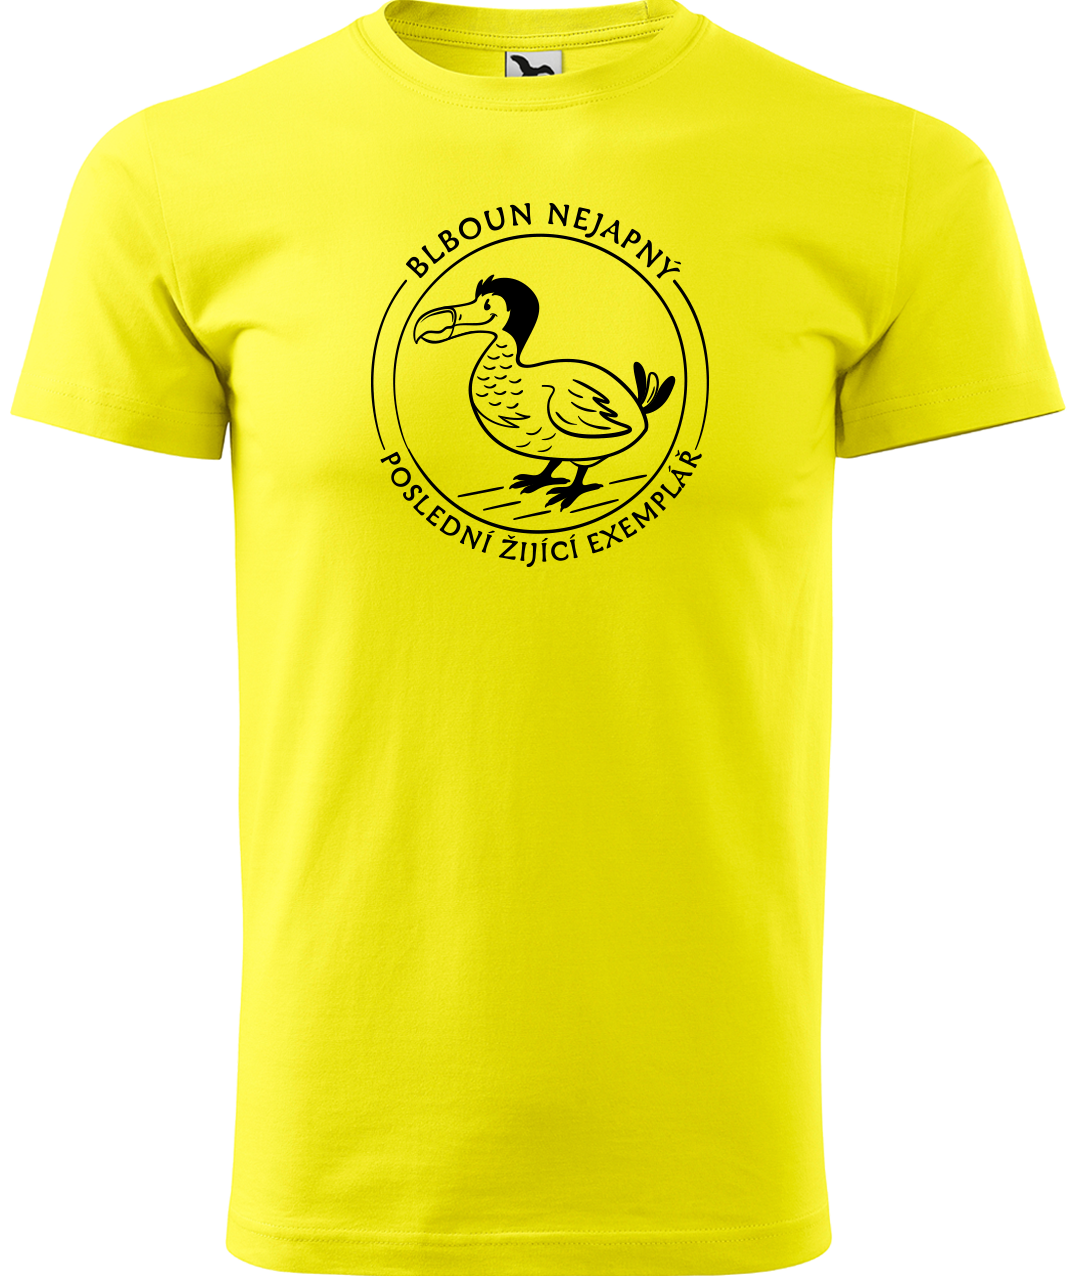 Vtipné tričko - Blboun nejapný Velikost: M, Barva: Žlutá (04)